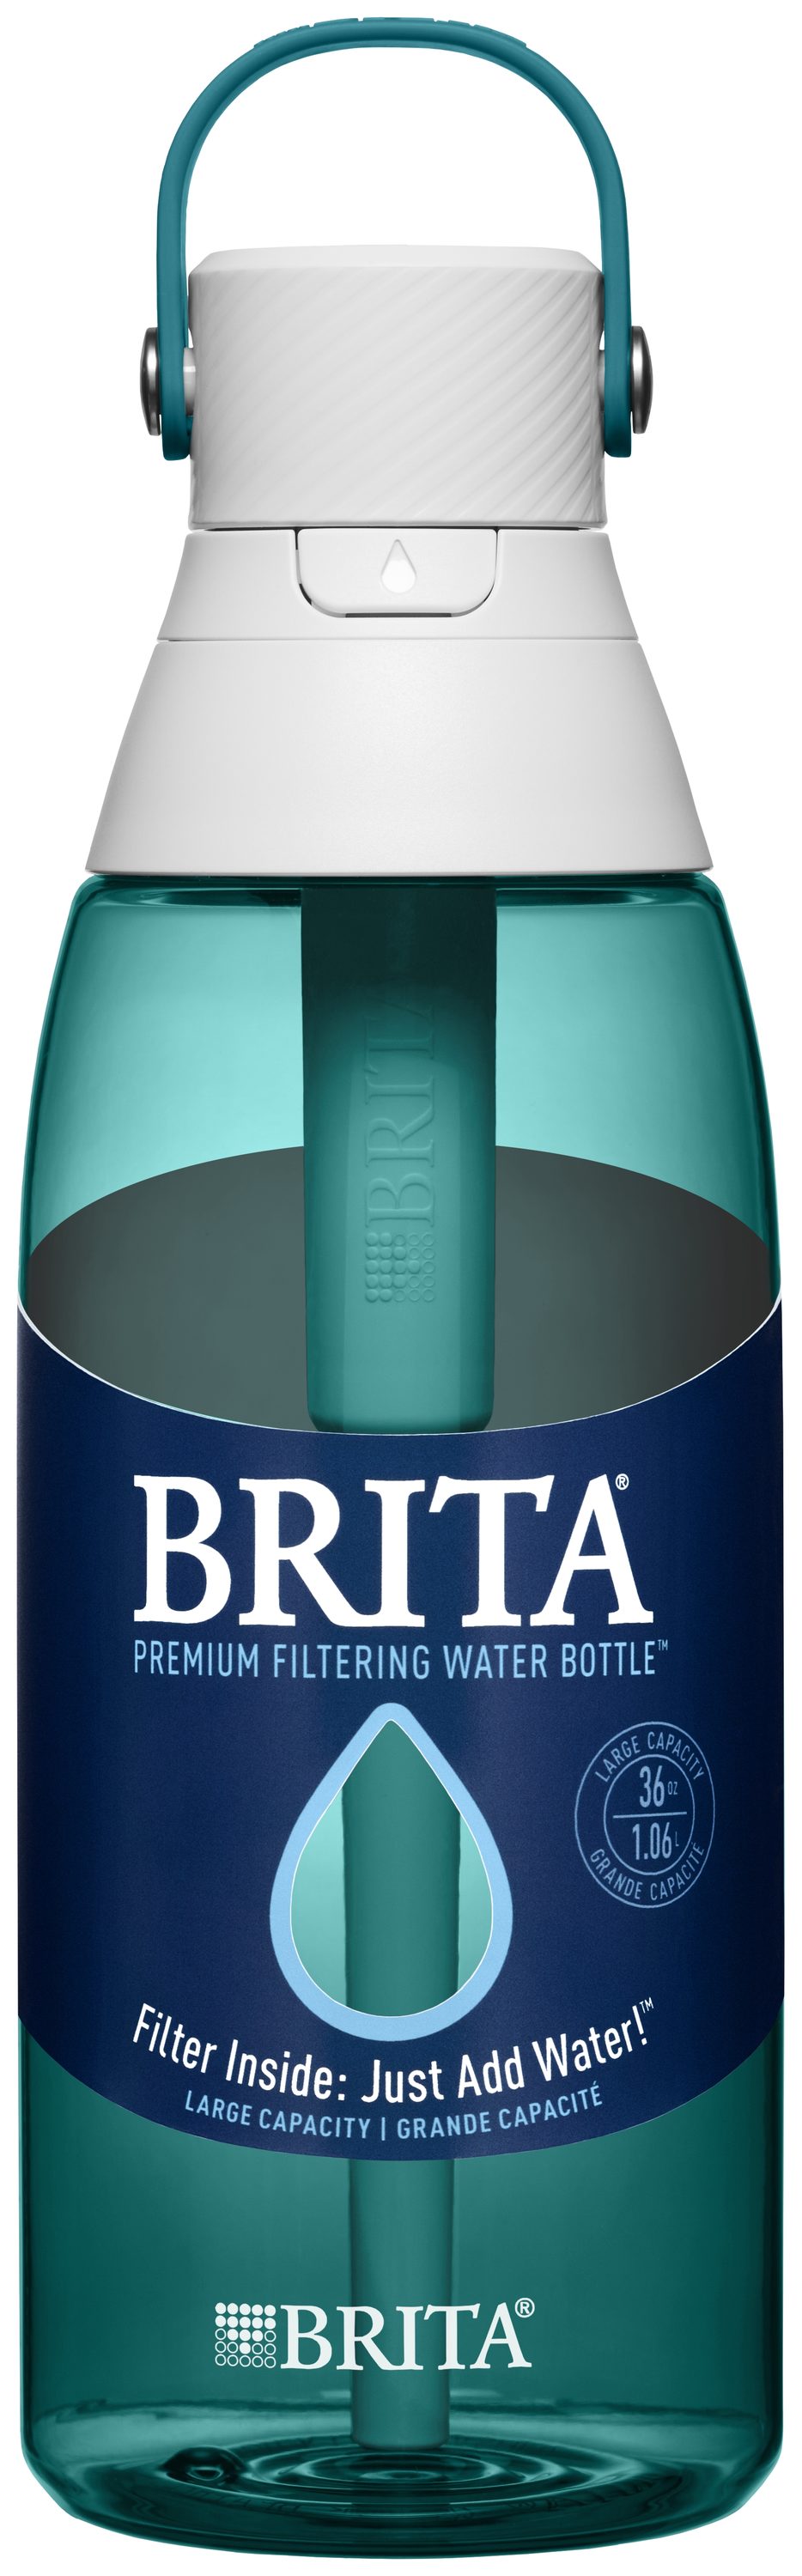 Brita Premium 36 oz. Filtering Water Bottle in Blush